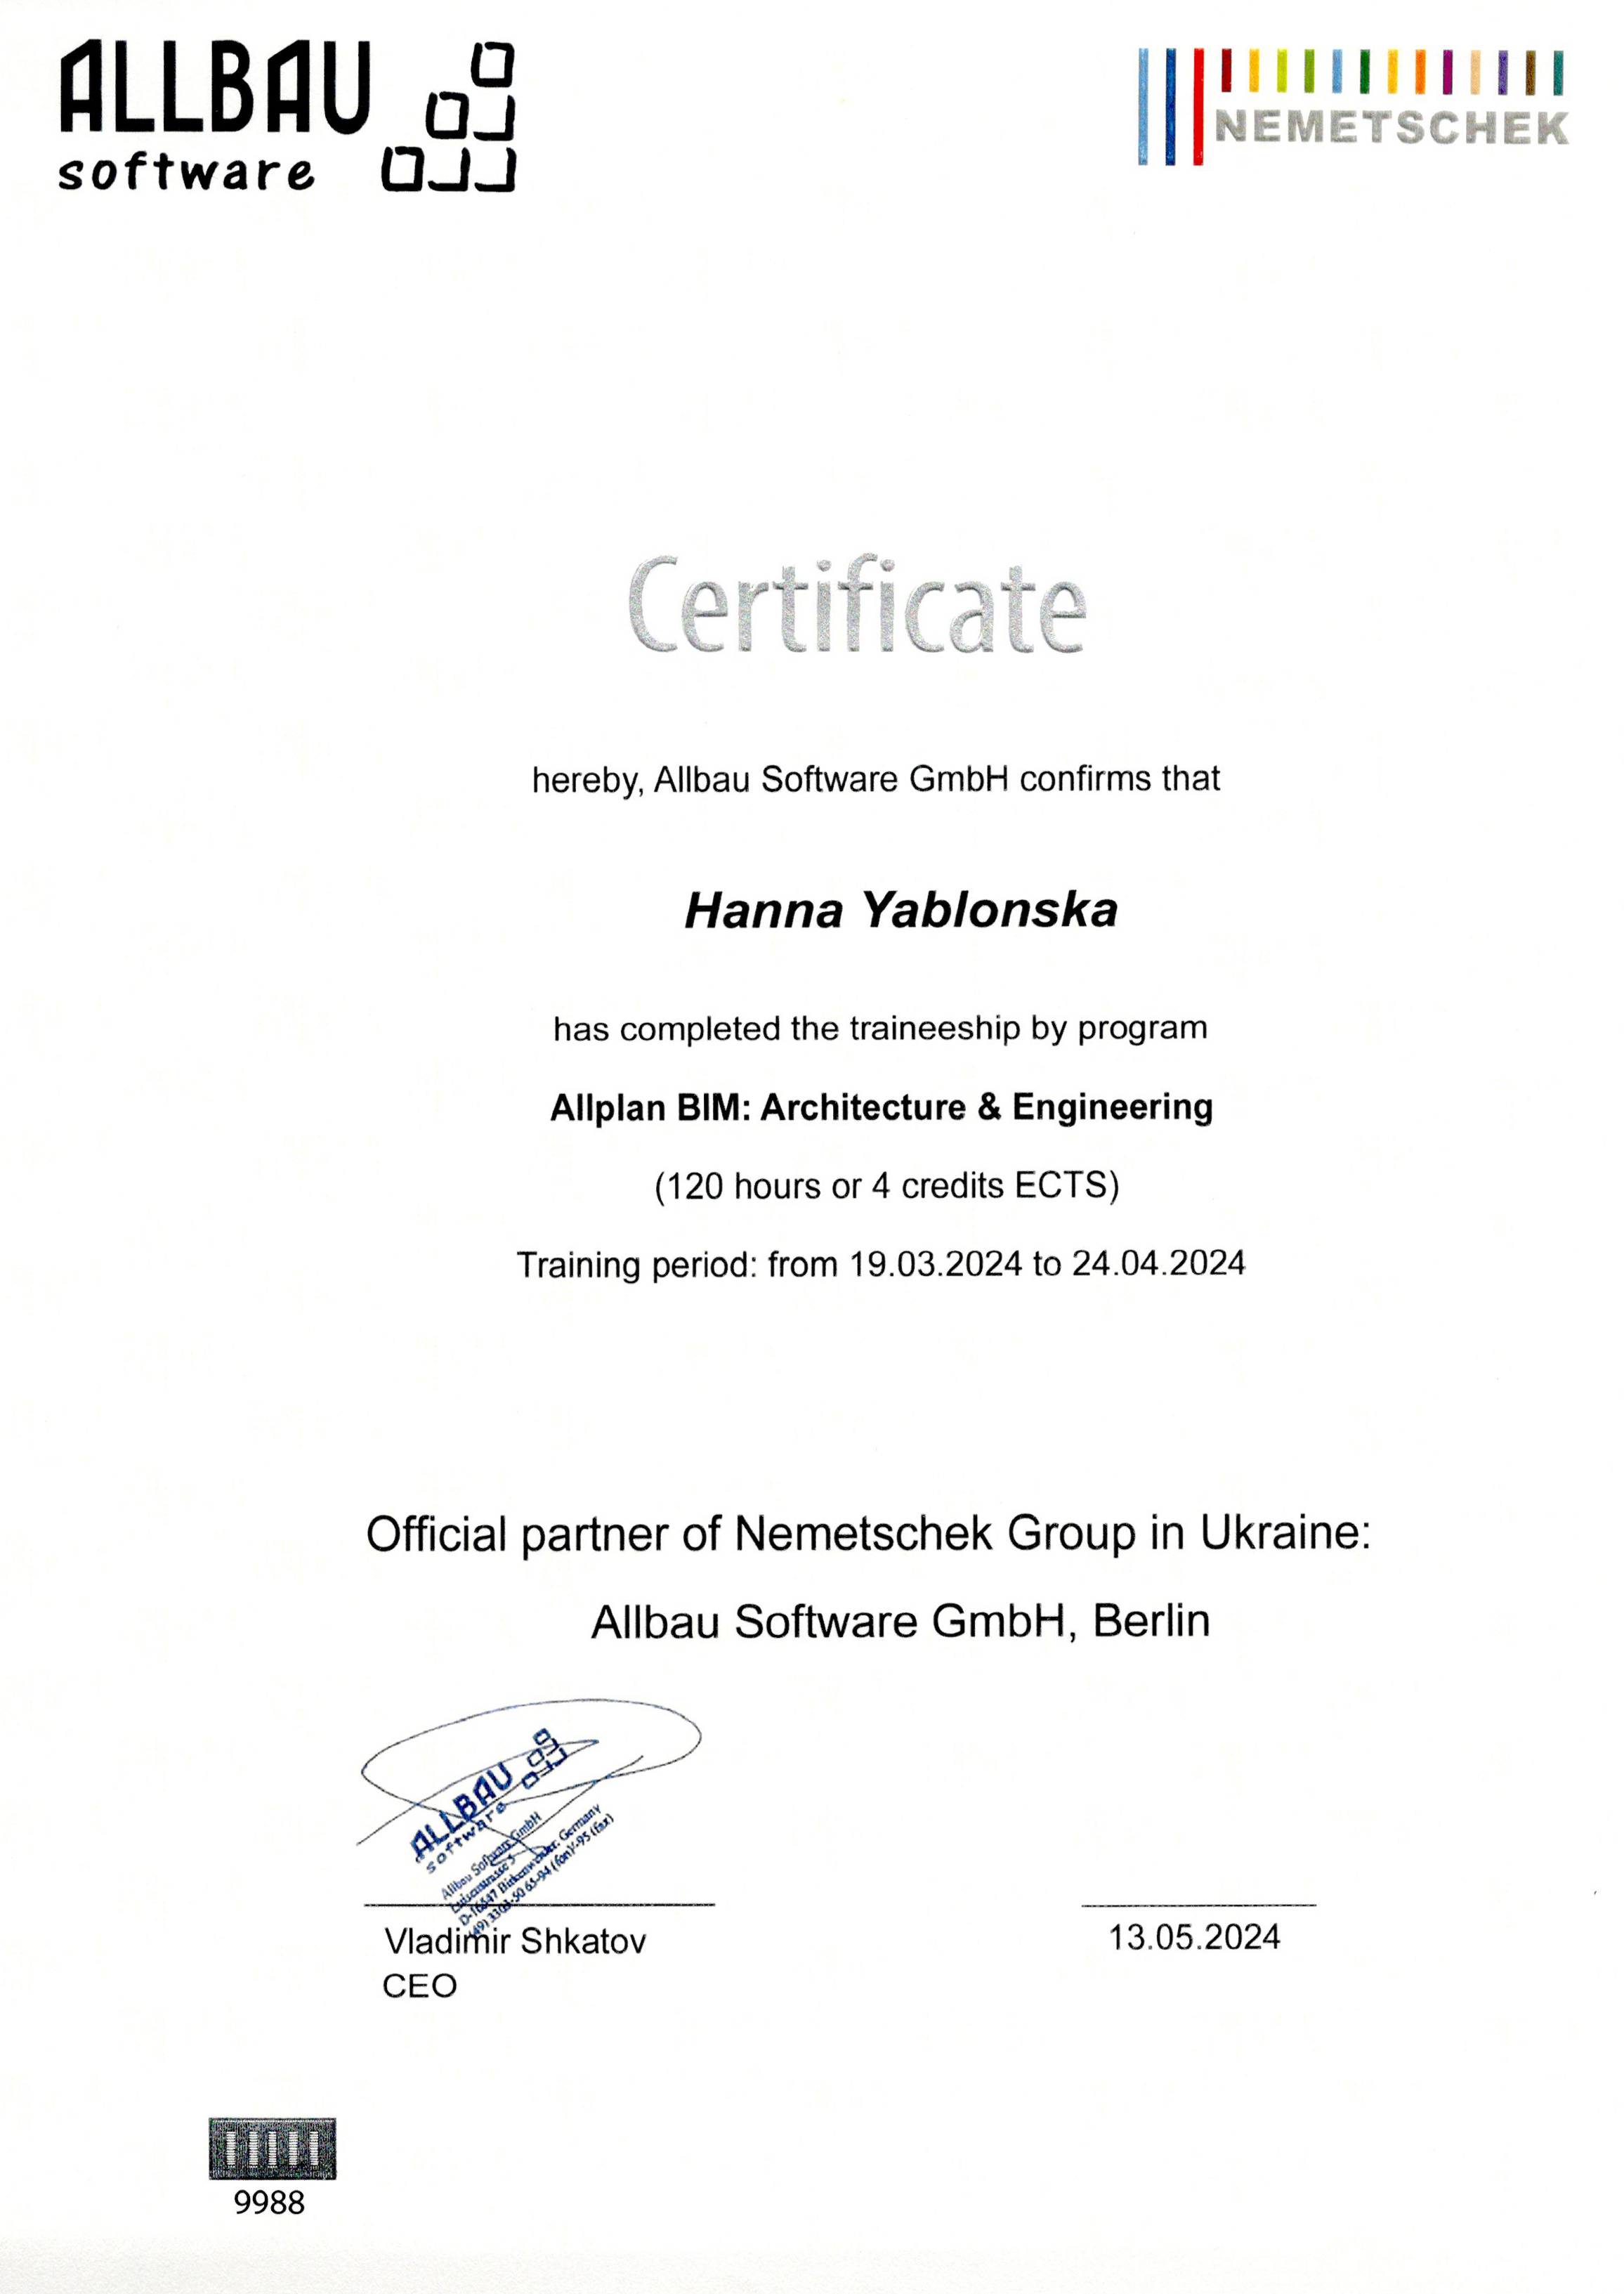 Міжнародне стажування за програмою "Allplan BIM: Architecture & Engineering" (120 hours or 4 credits ECTS) Certificate №9986, Берлін 2024